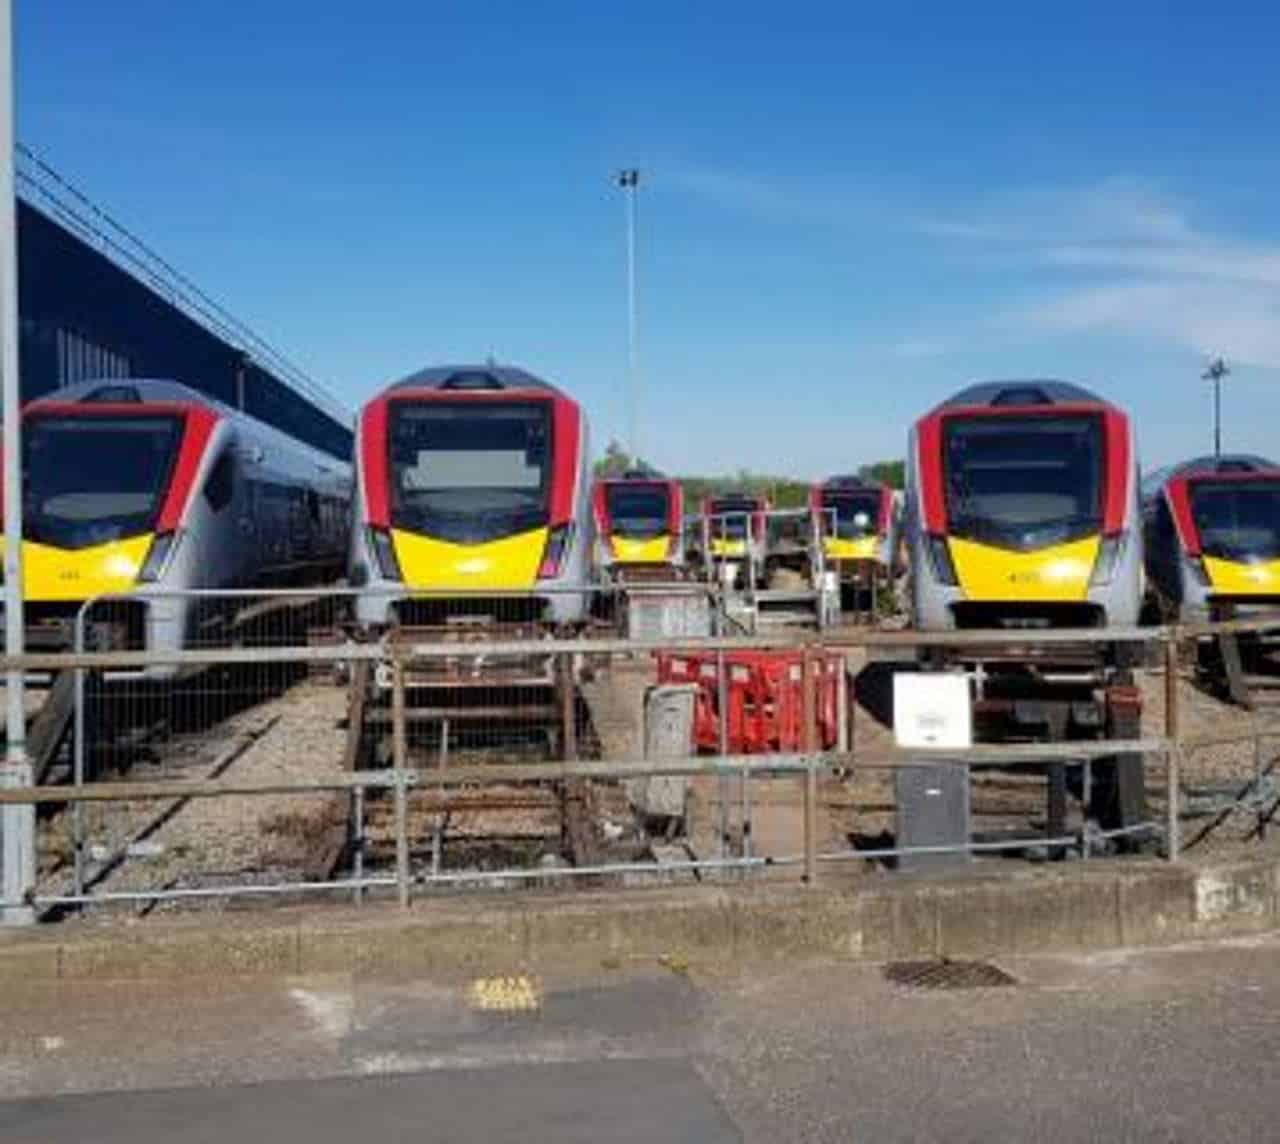 Greater Anglia bi mode trains